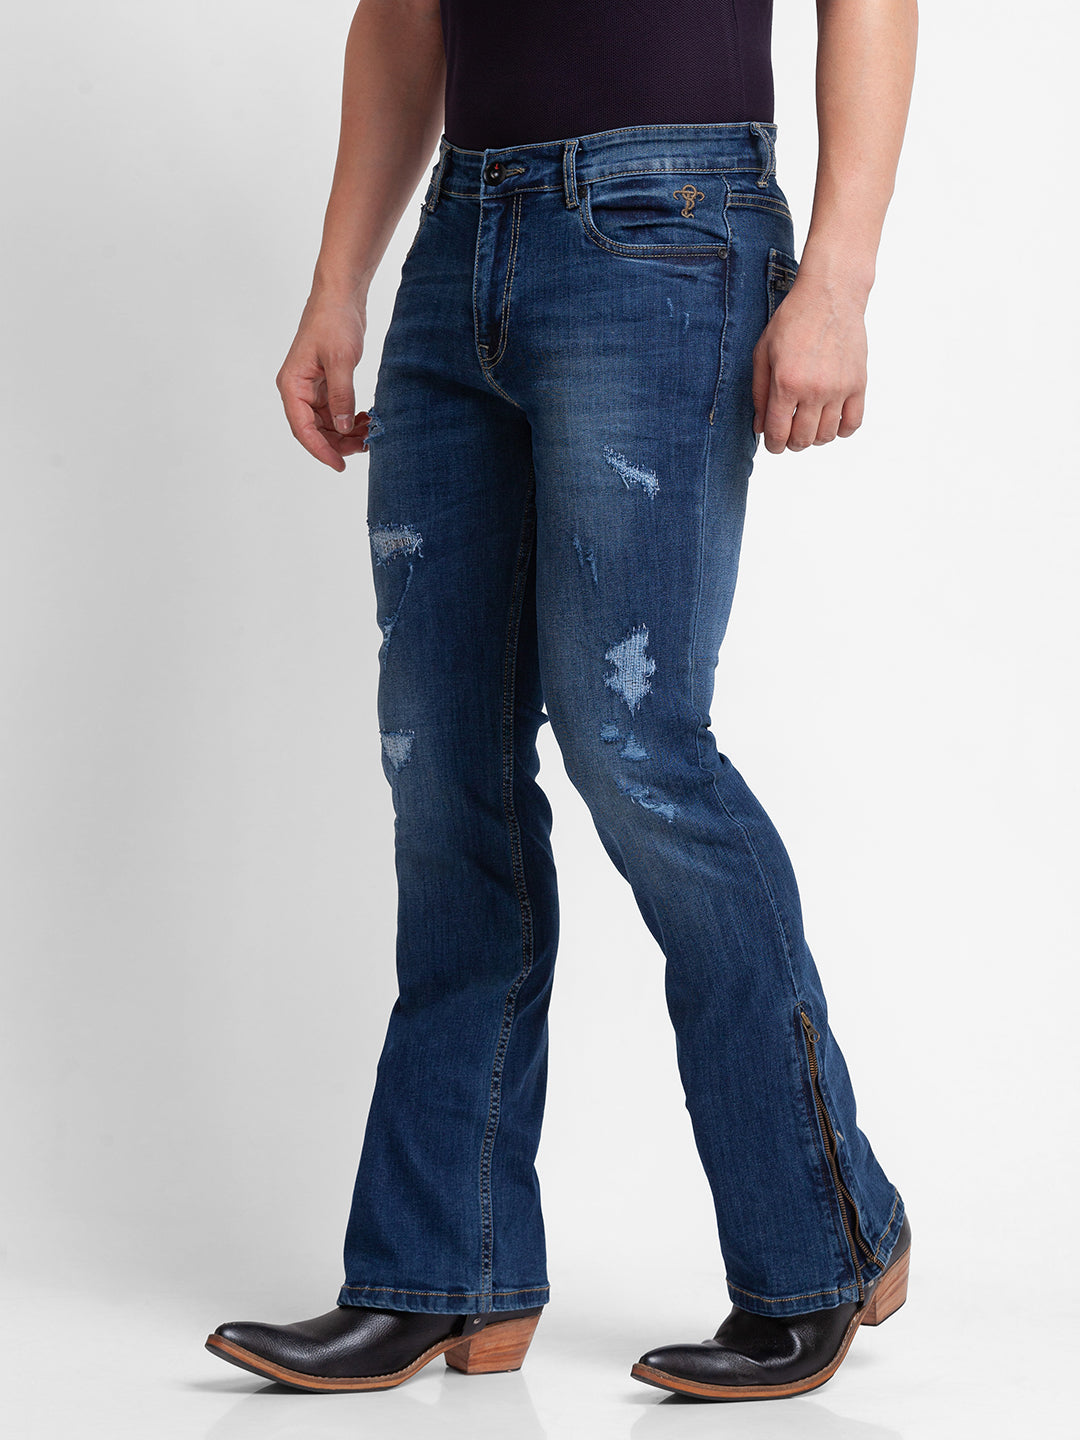 Black Bootcut jeans for Men | Lyst